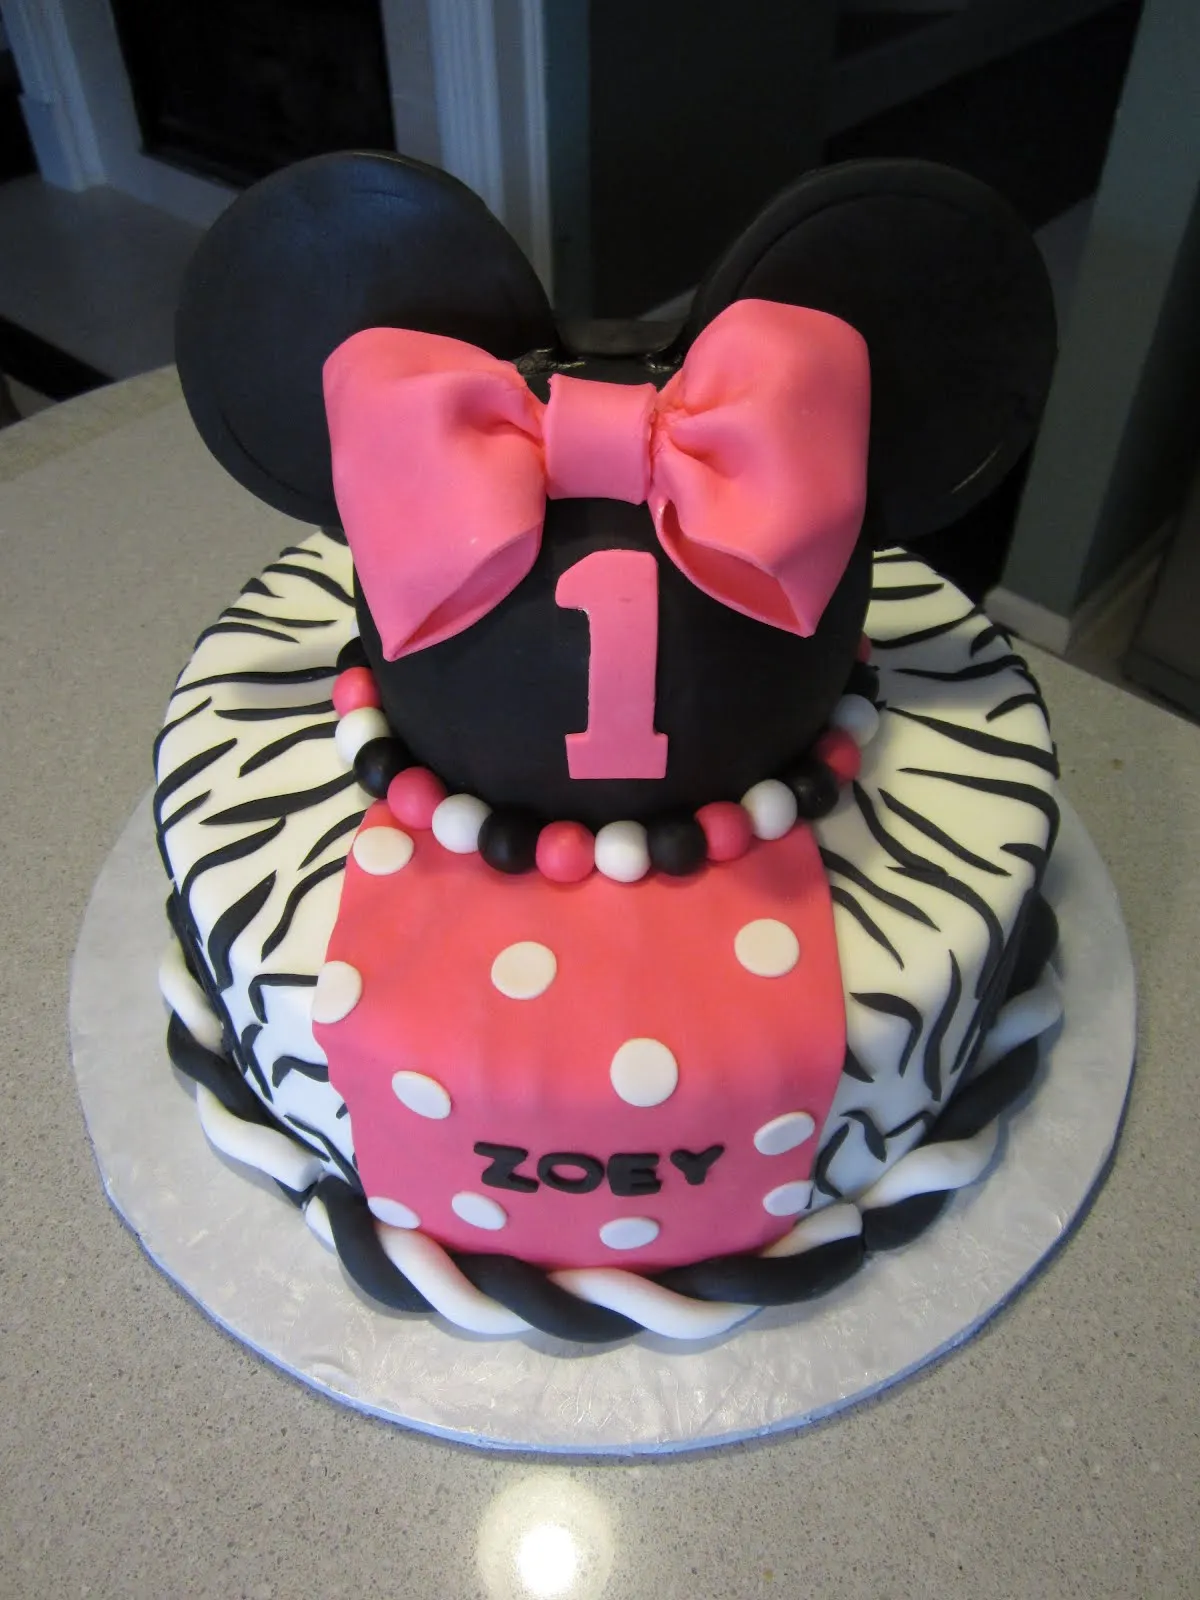 Cakes By Nancy: Minnie Mouse in Zebra Print